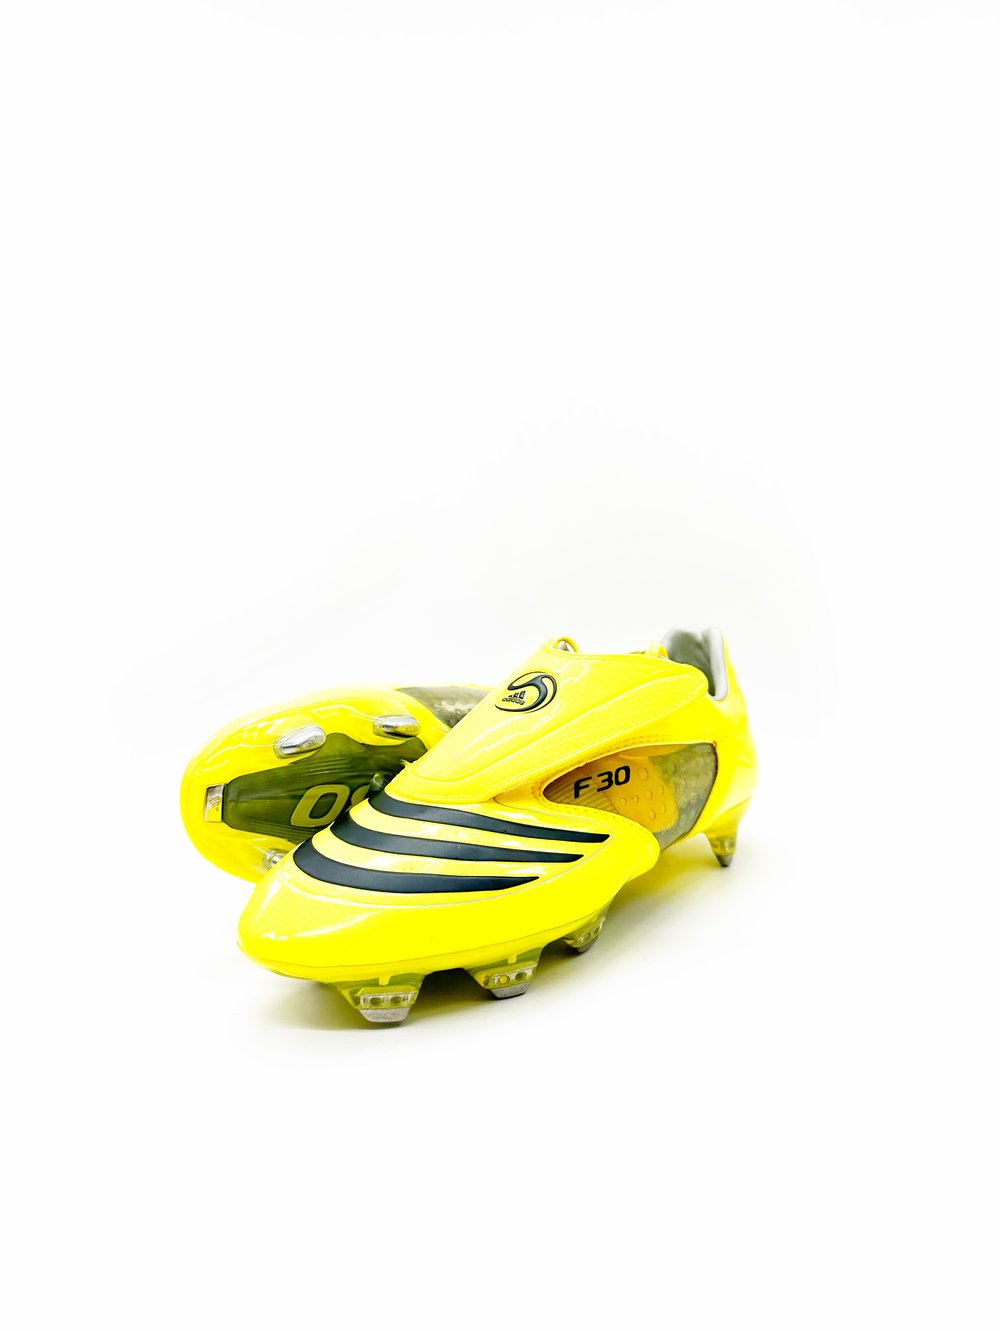 Image of Adidas F30.8 Yellow SG